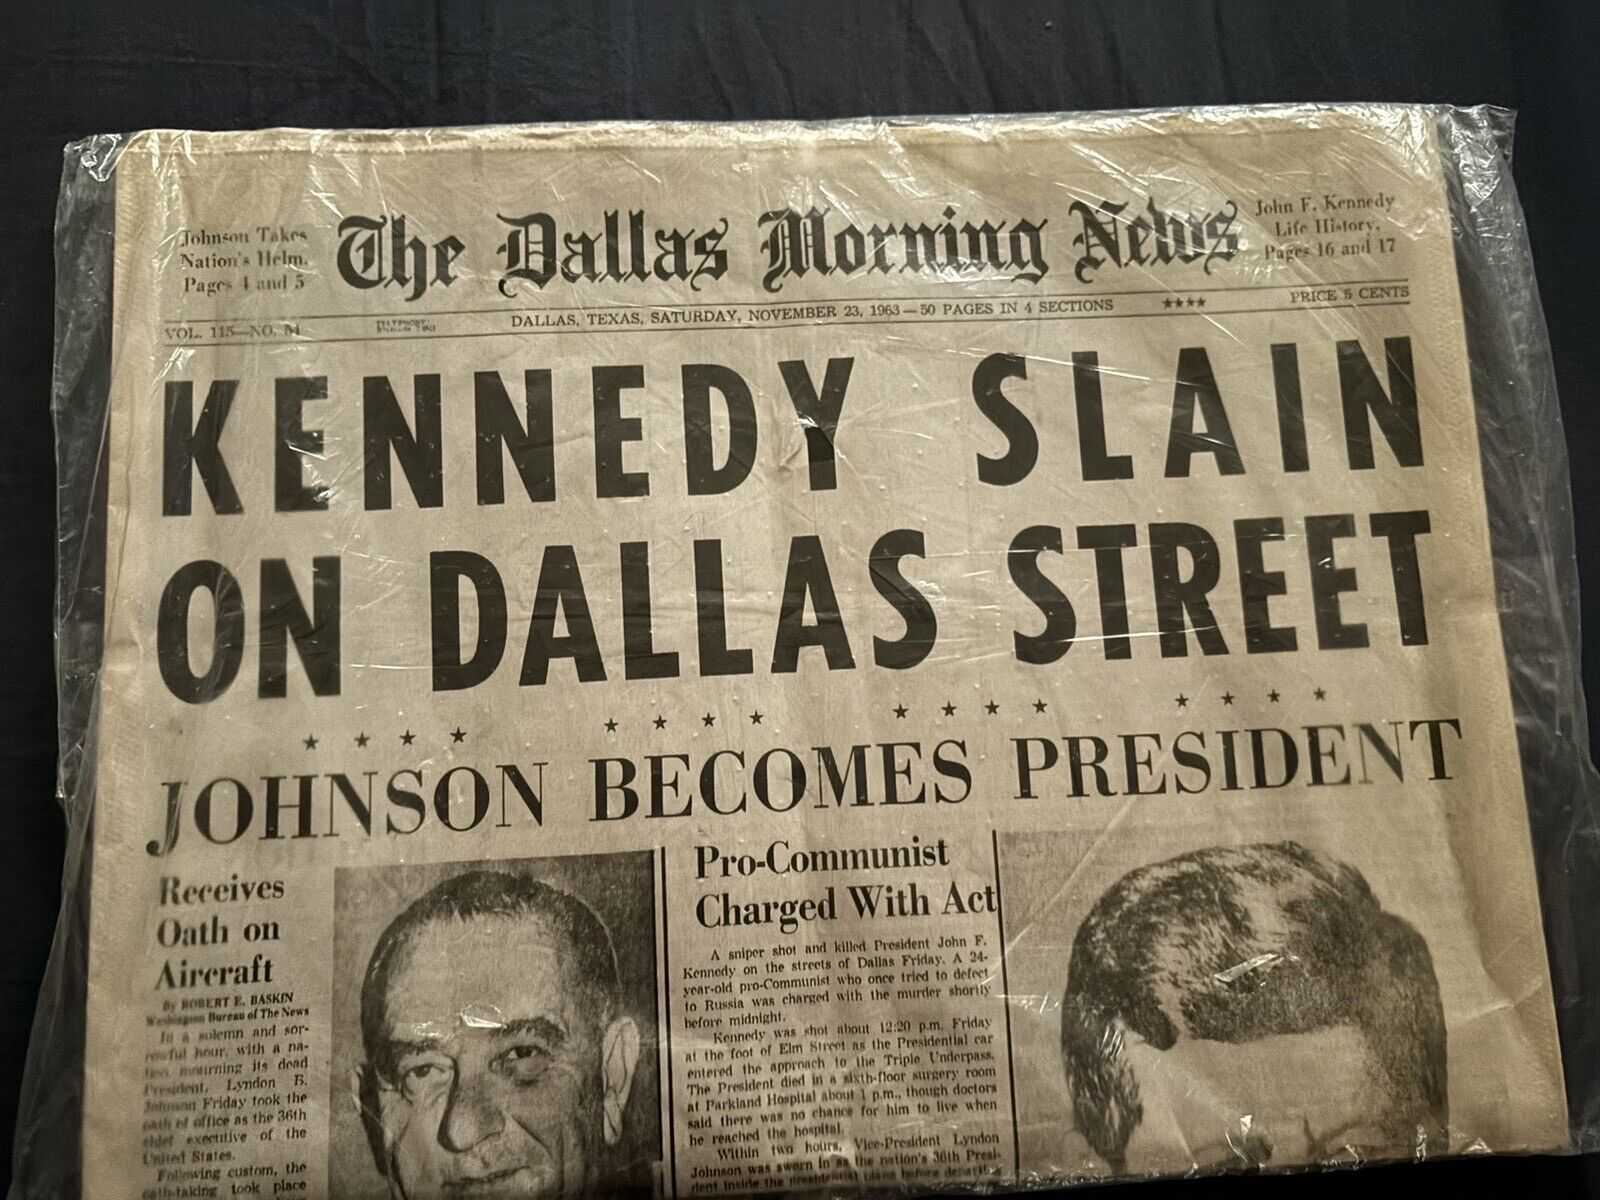 The Dallas Morning News Newspaper, Nov 23, 1963  Kennedy Slain on Dallas Street.